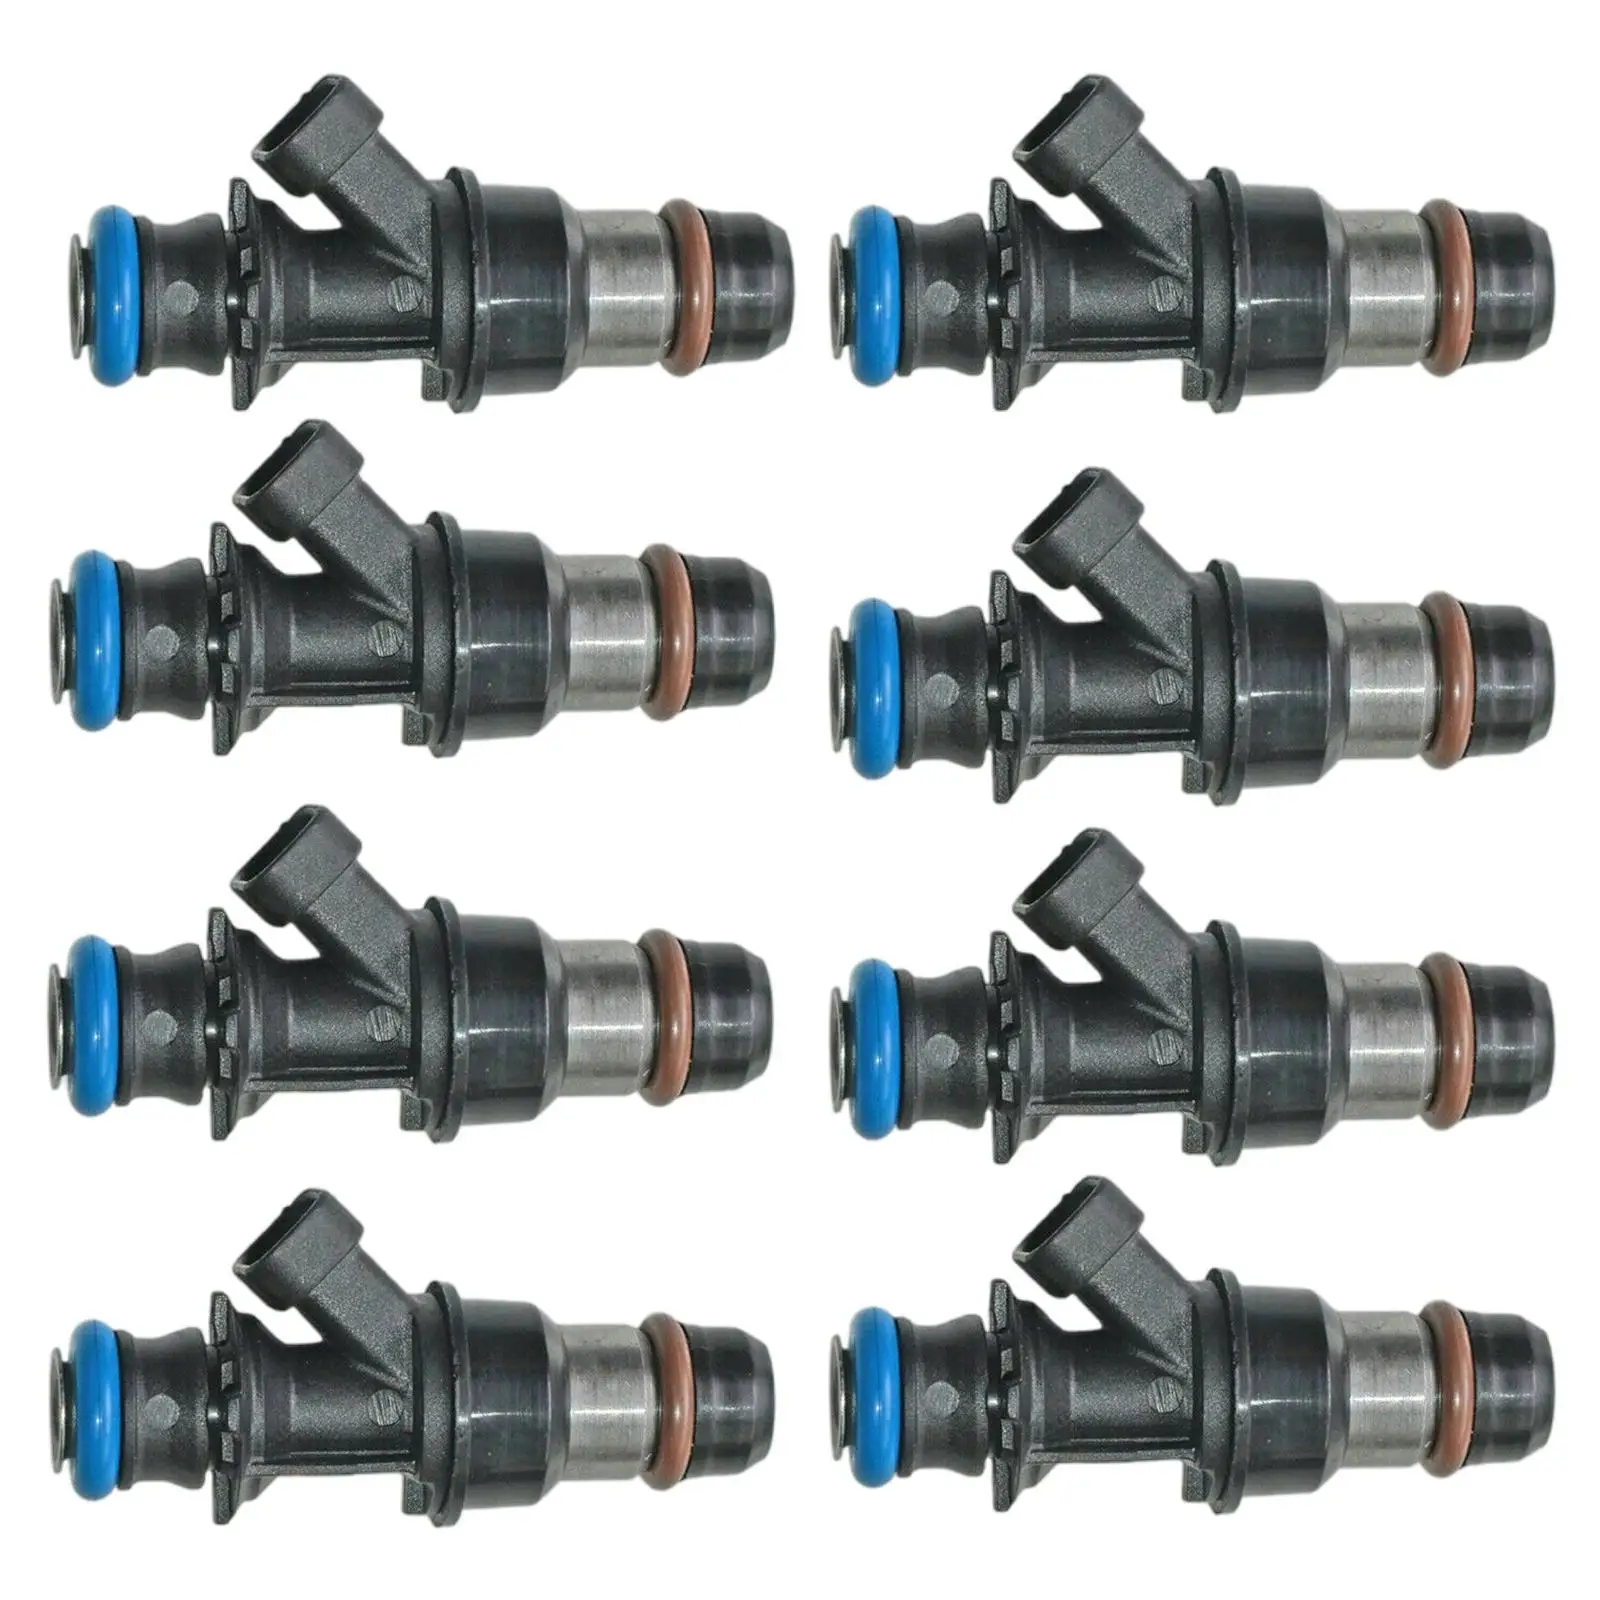 Set of 8 Fuel Injectors Car Supplies Vehicle Parts Black Replacement Fit for Cadillac V8-5.3L/6.0L 02-05 17113553 Accessories